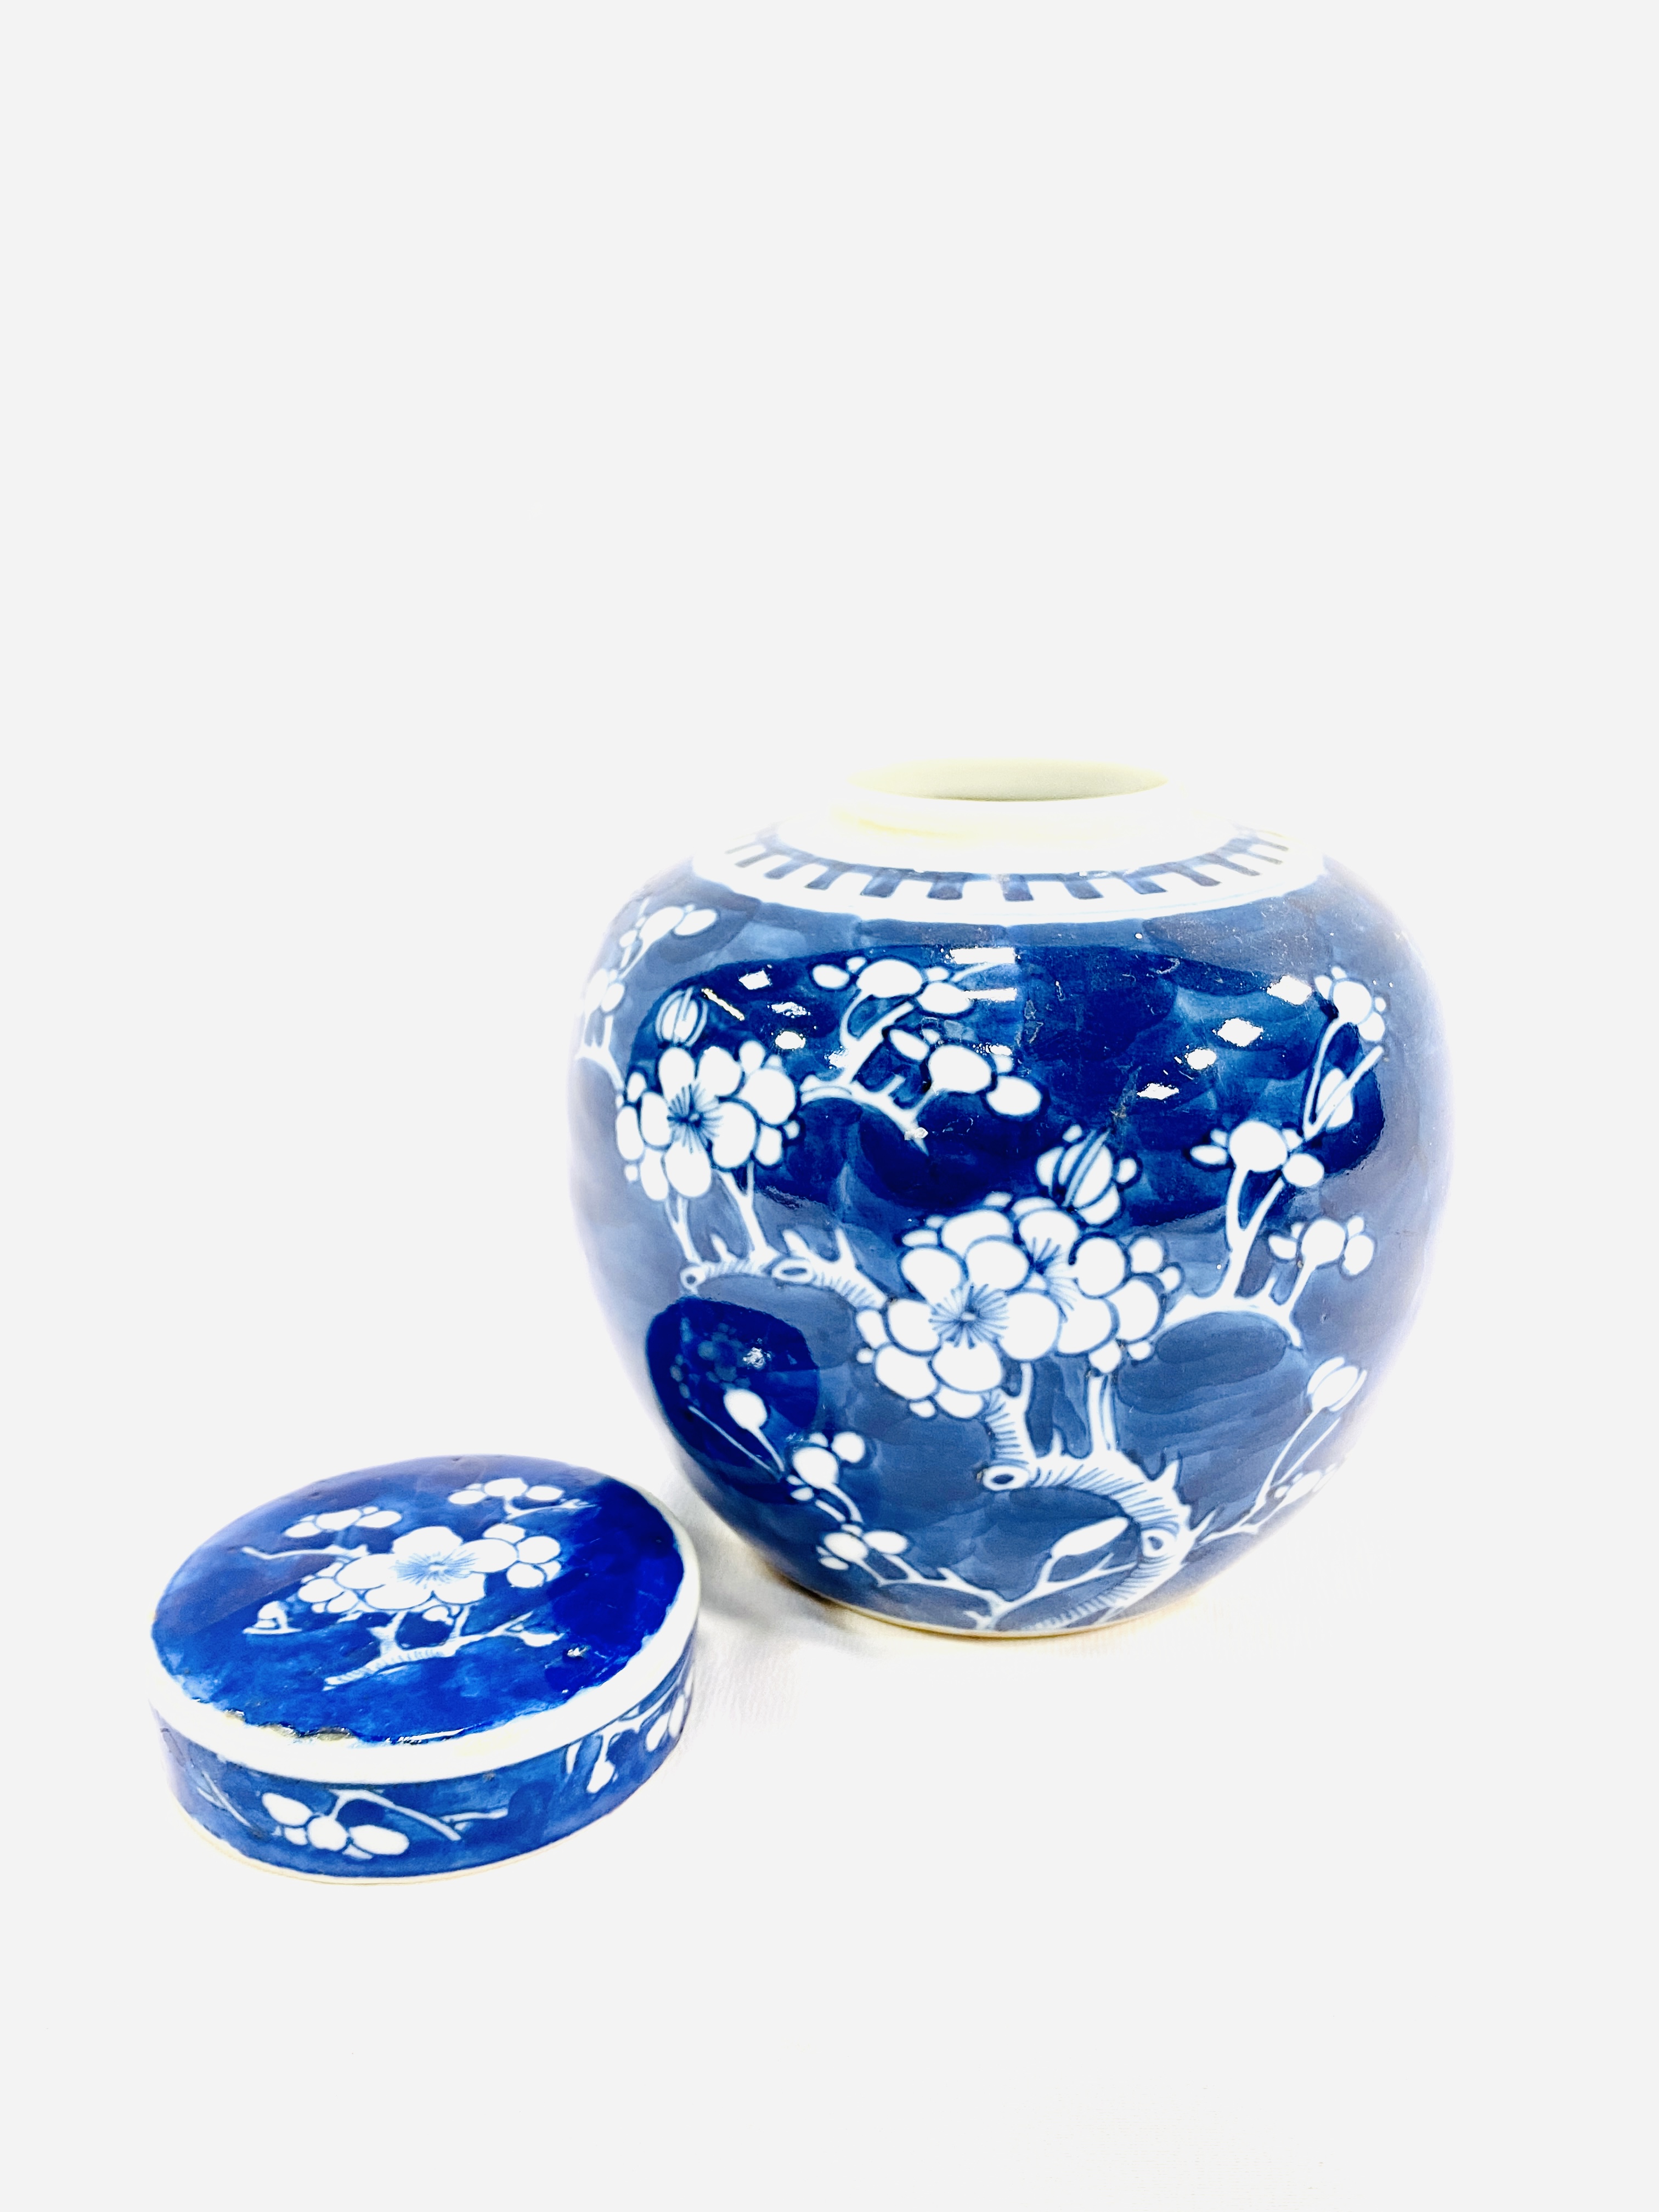 Oriental bowl and ginger jar - Image 7 of 17